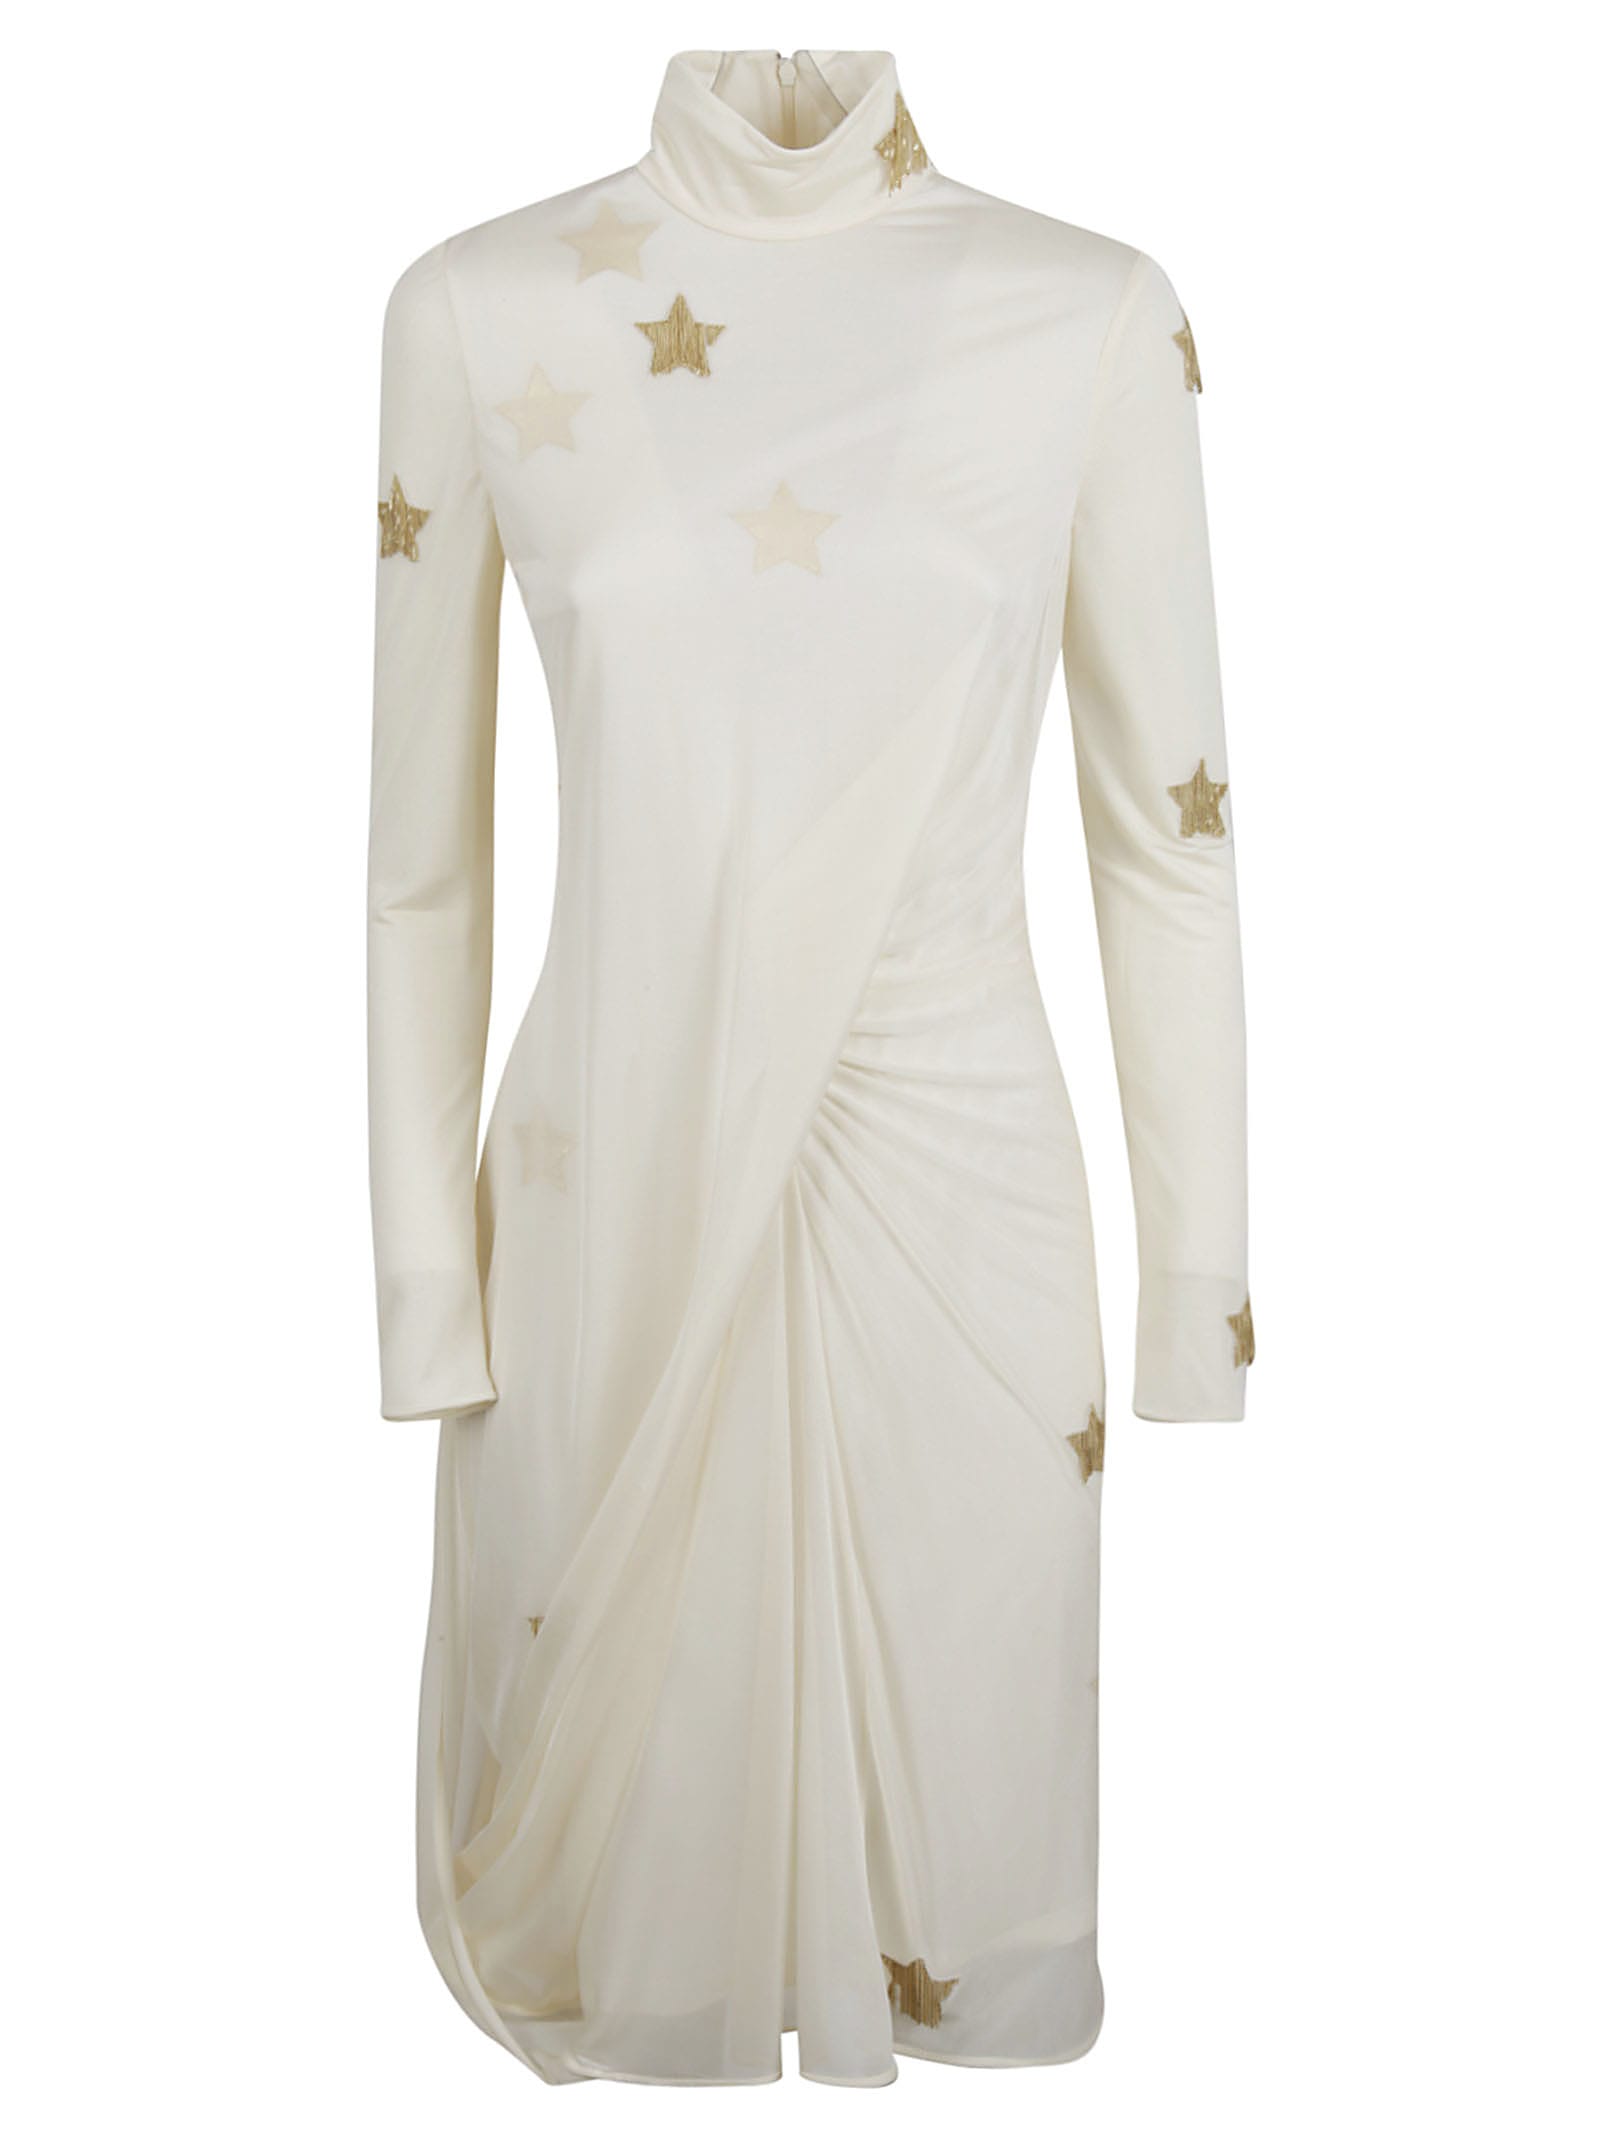 Burberry Metallic Star Embellished Gathered Dress